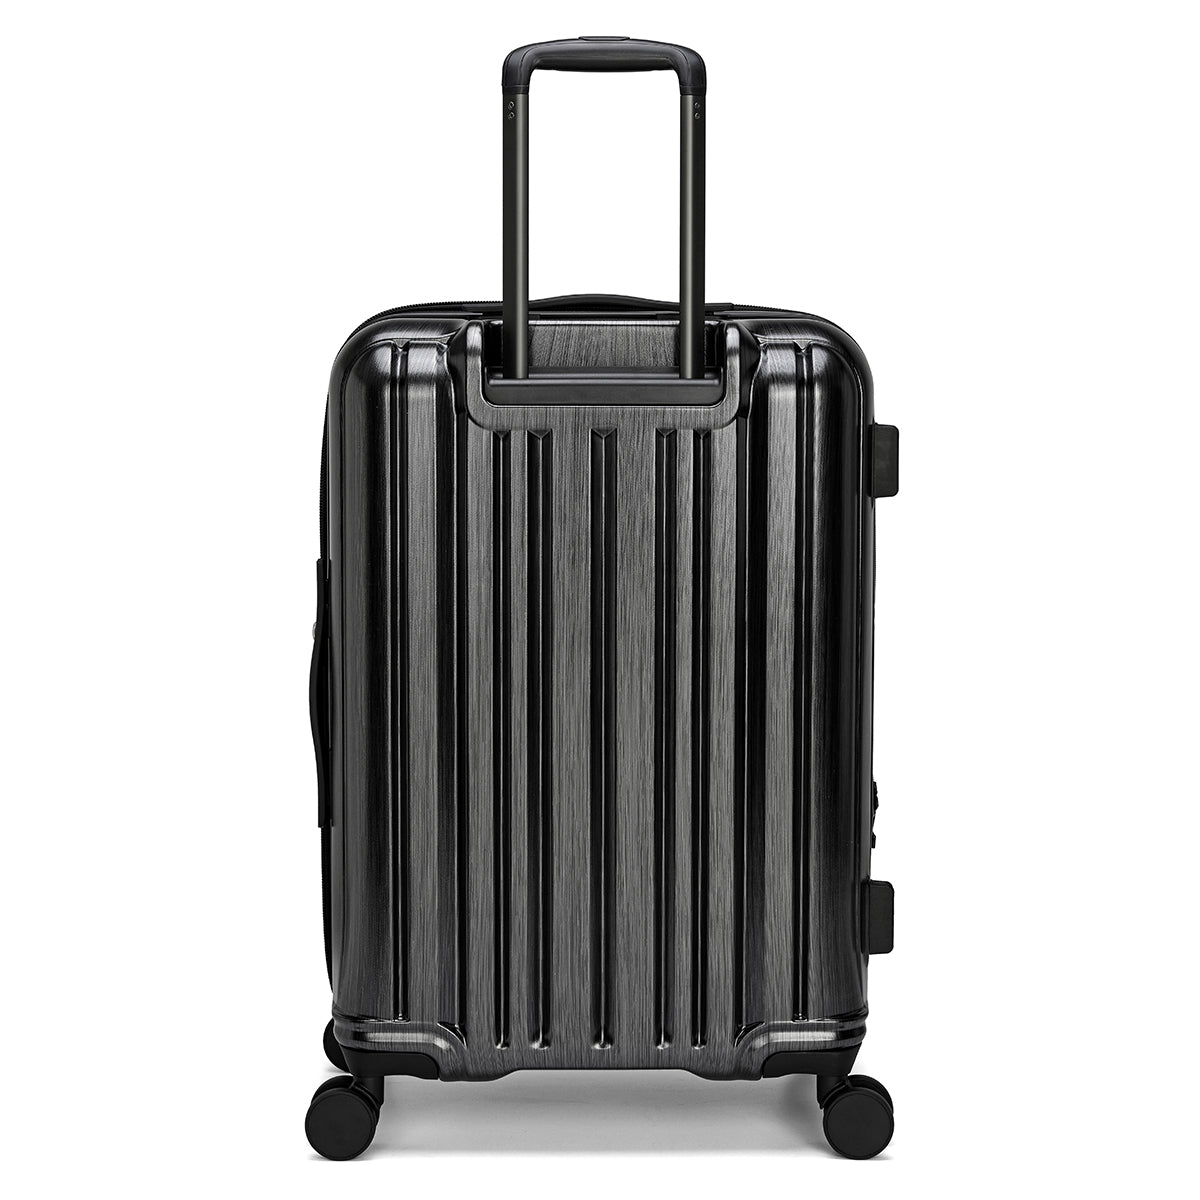 Polycarbonate travel bags, bold design, several sizes, black color